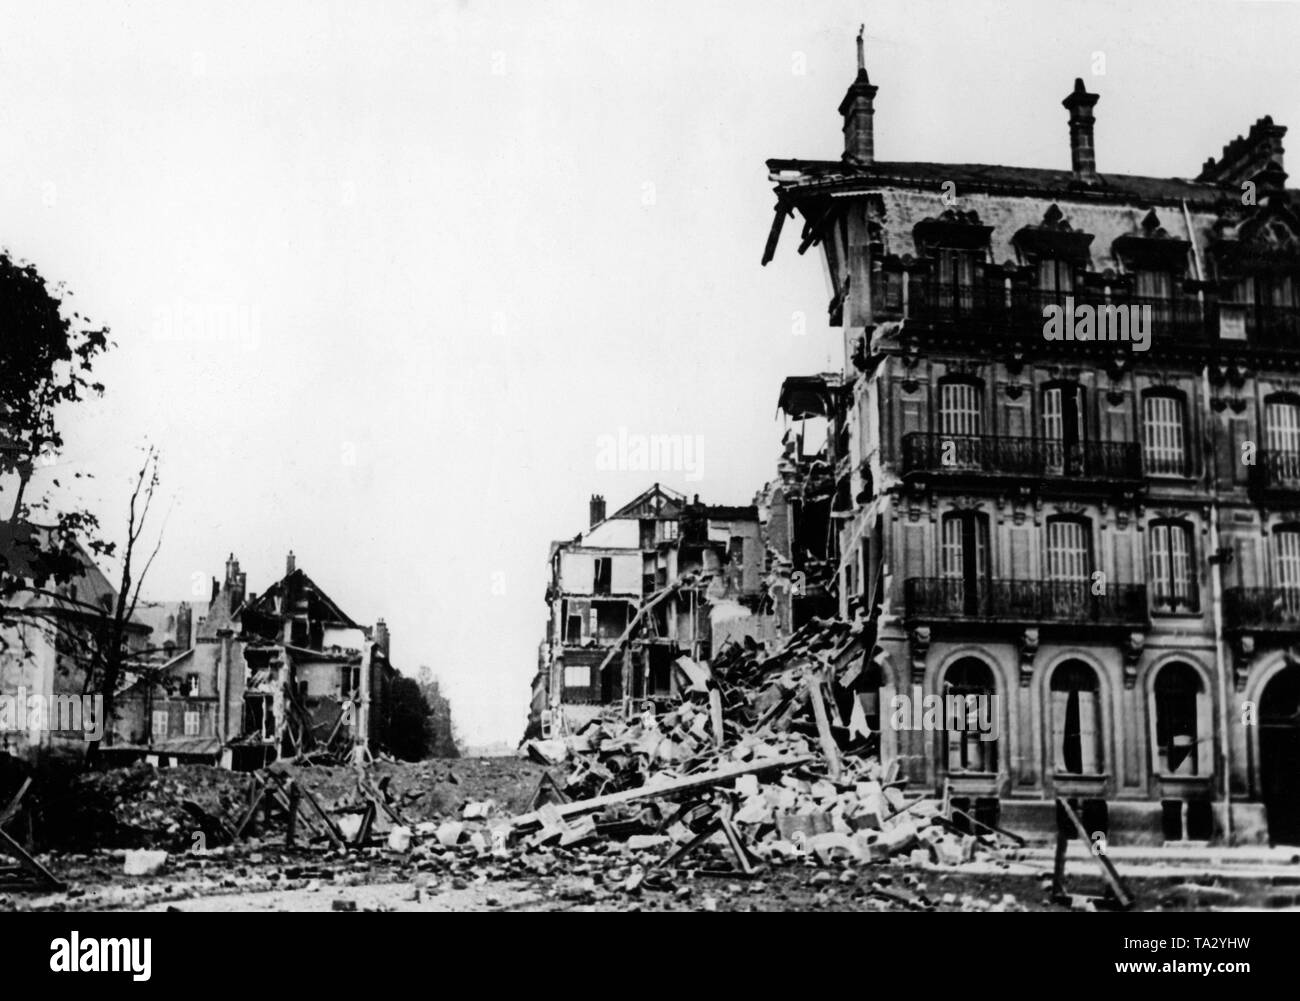 Artillerie zerstört Häuser in Sedan. Foto: kriegsberichterstatter Kindermann. Stockfoto